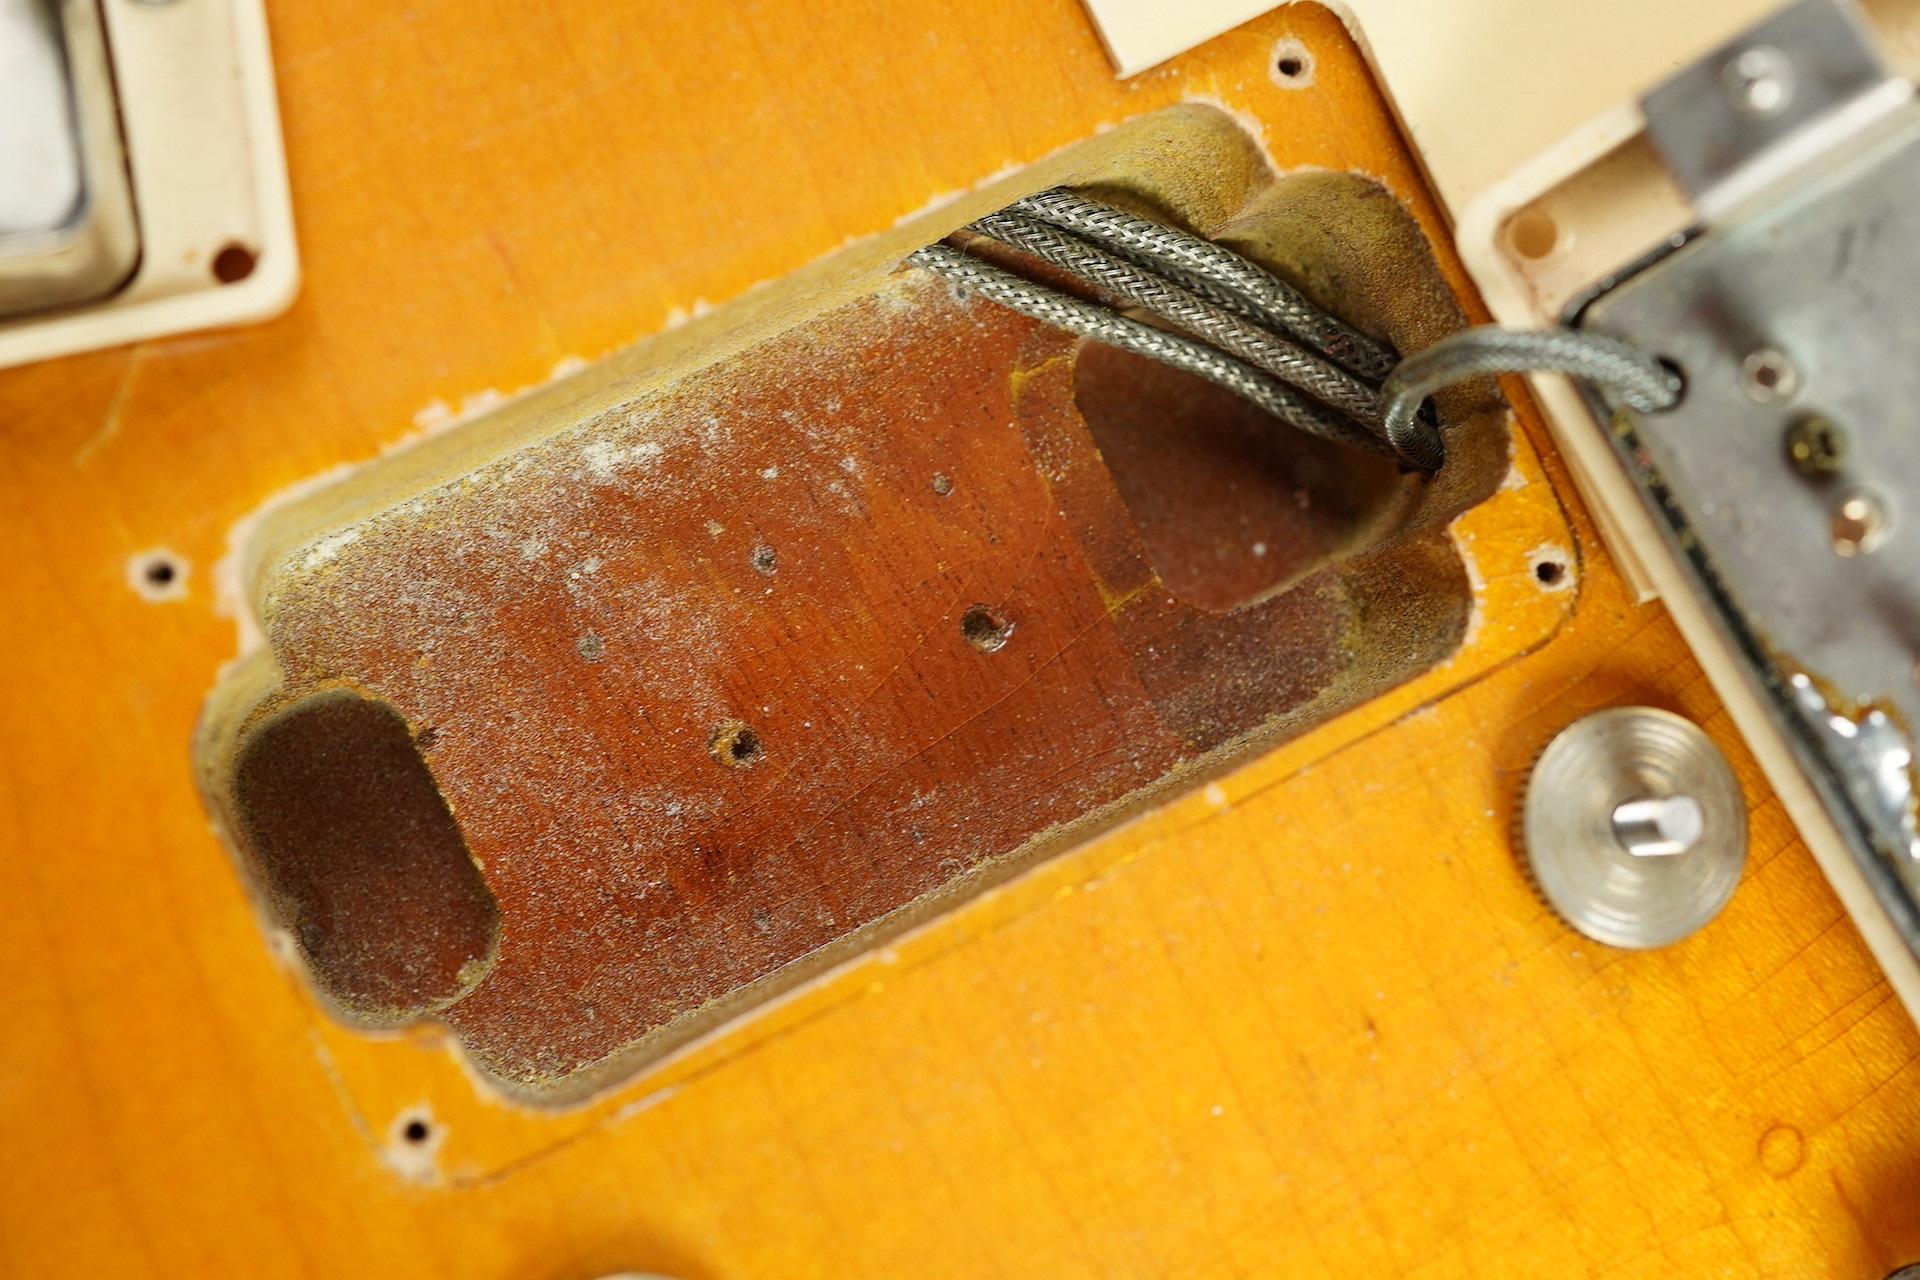 1953 Gibson Les Paul Standard Burst Conversion